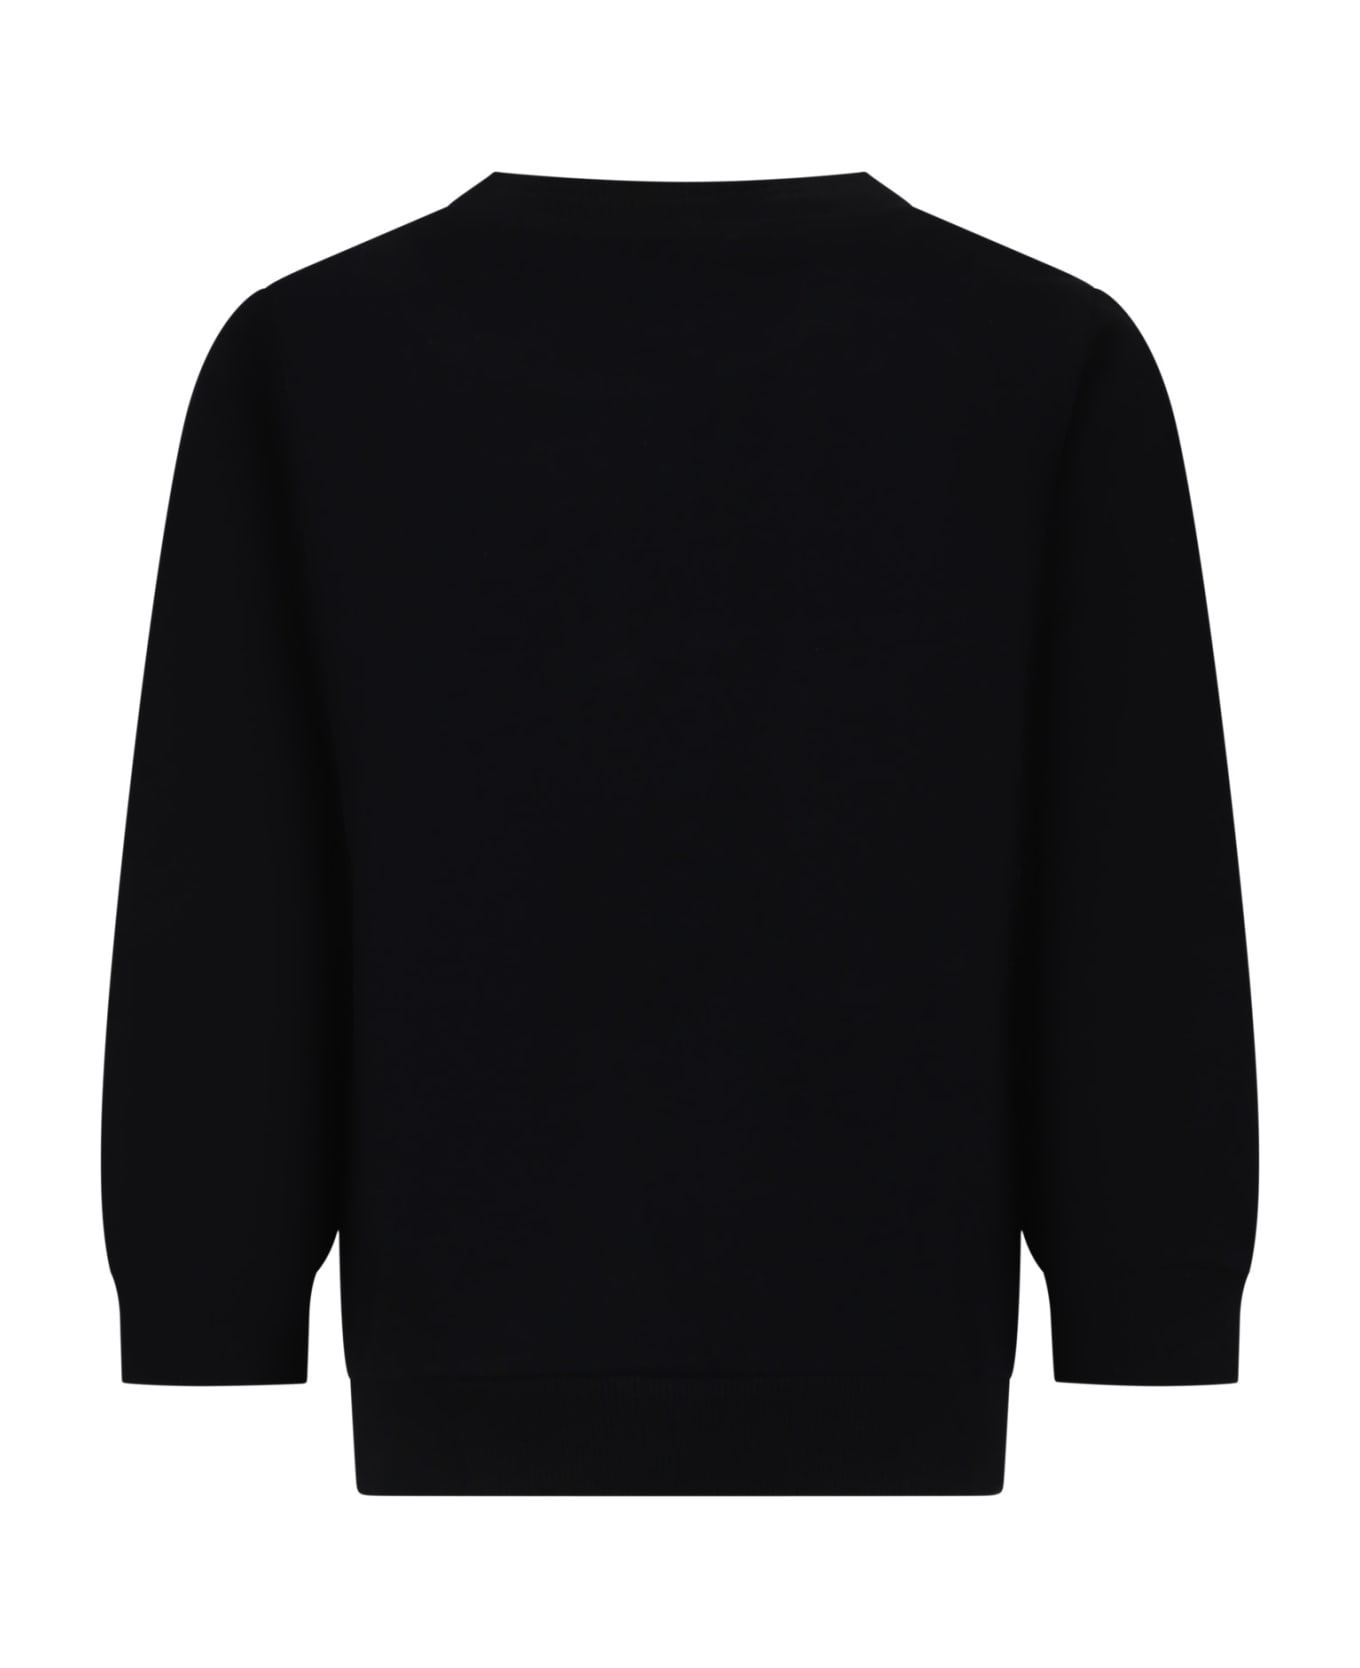 Balmain Black Sweatshirt For Kids With Logo - Black